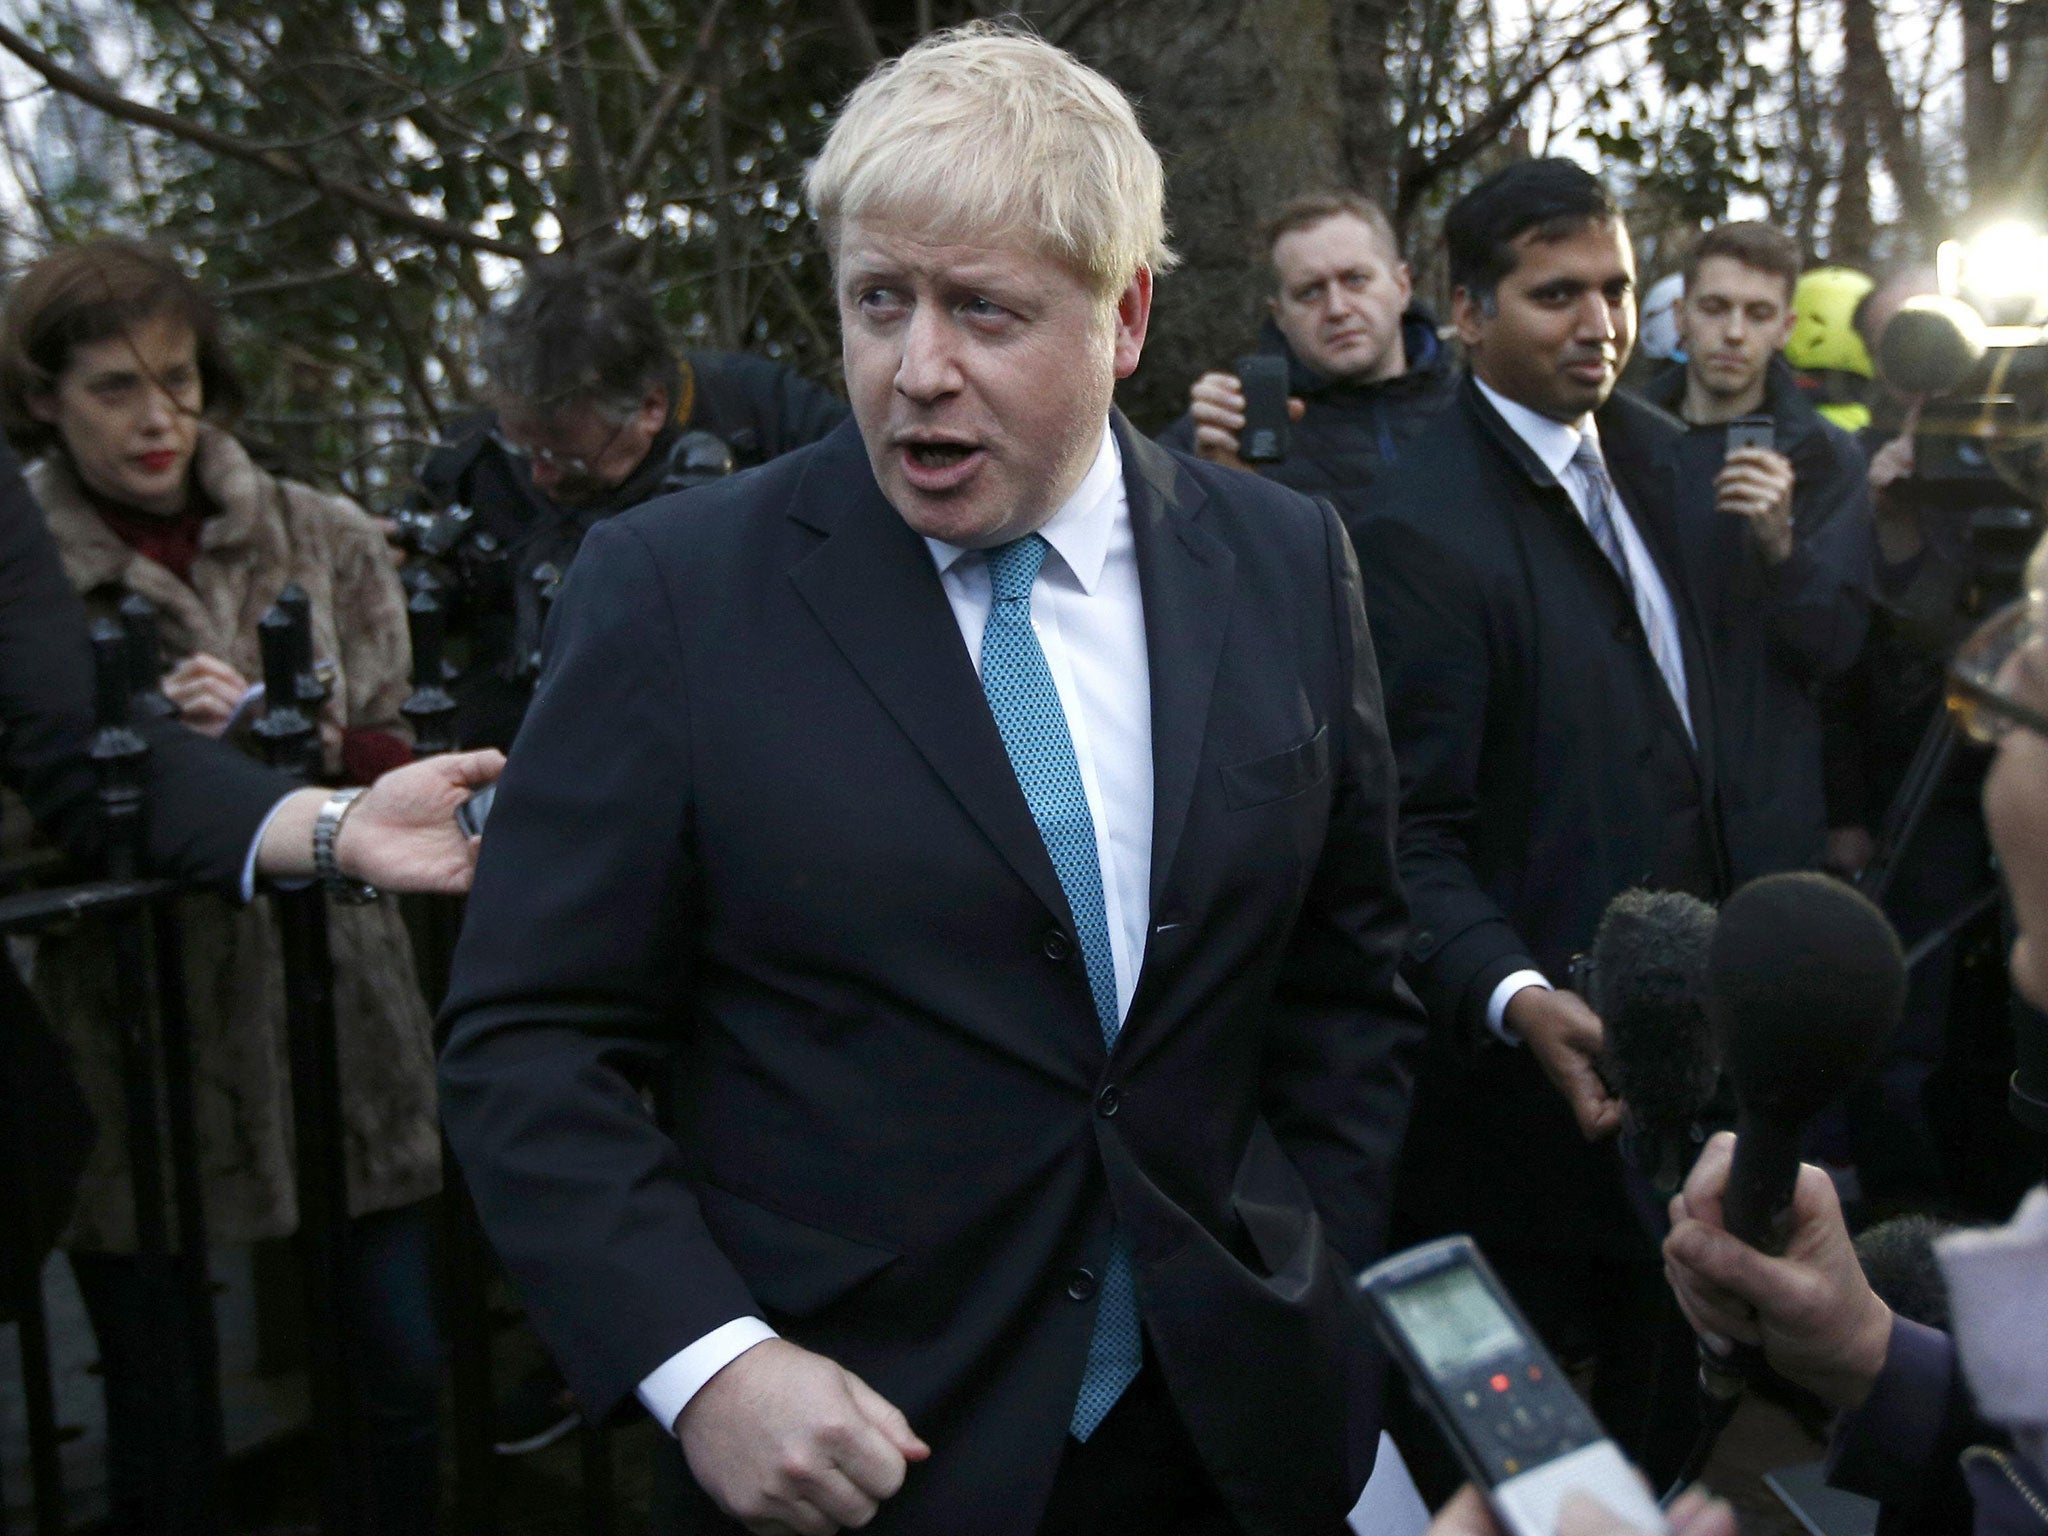 Boris Johnson Backs Eu Exit London Mayor Announces Brexit Support